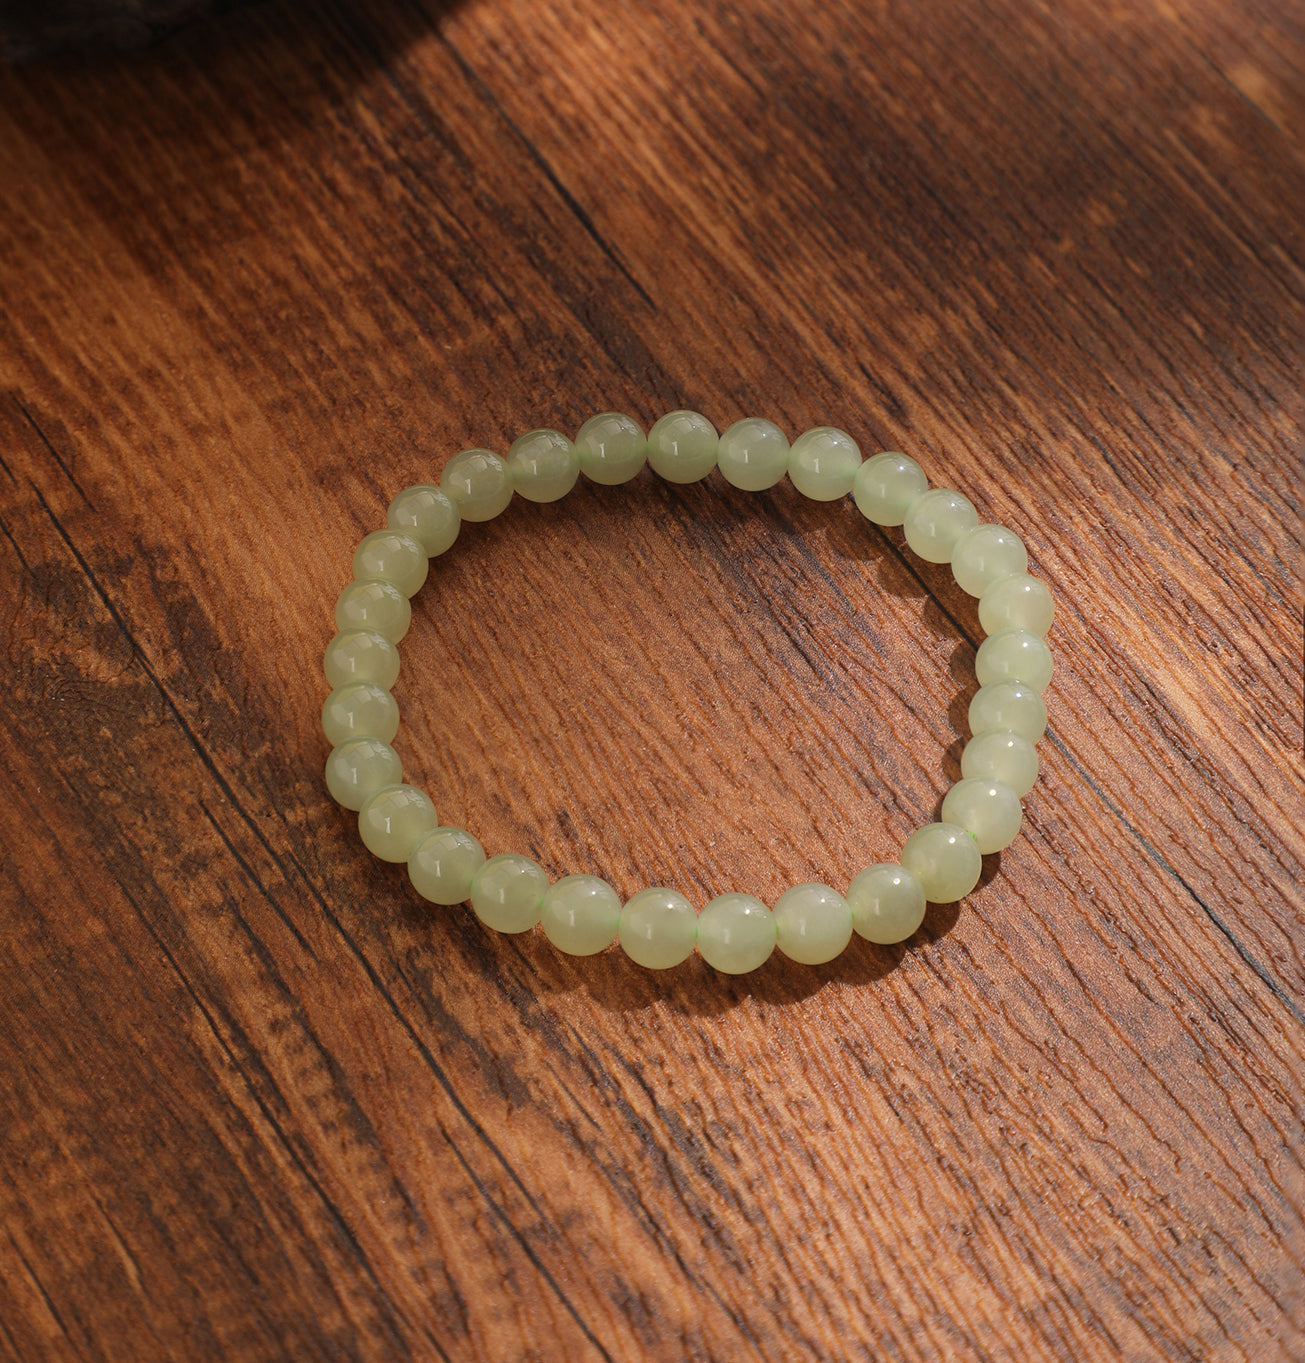 The round Hetian Jade bracelet